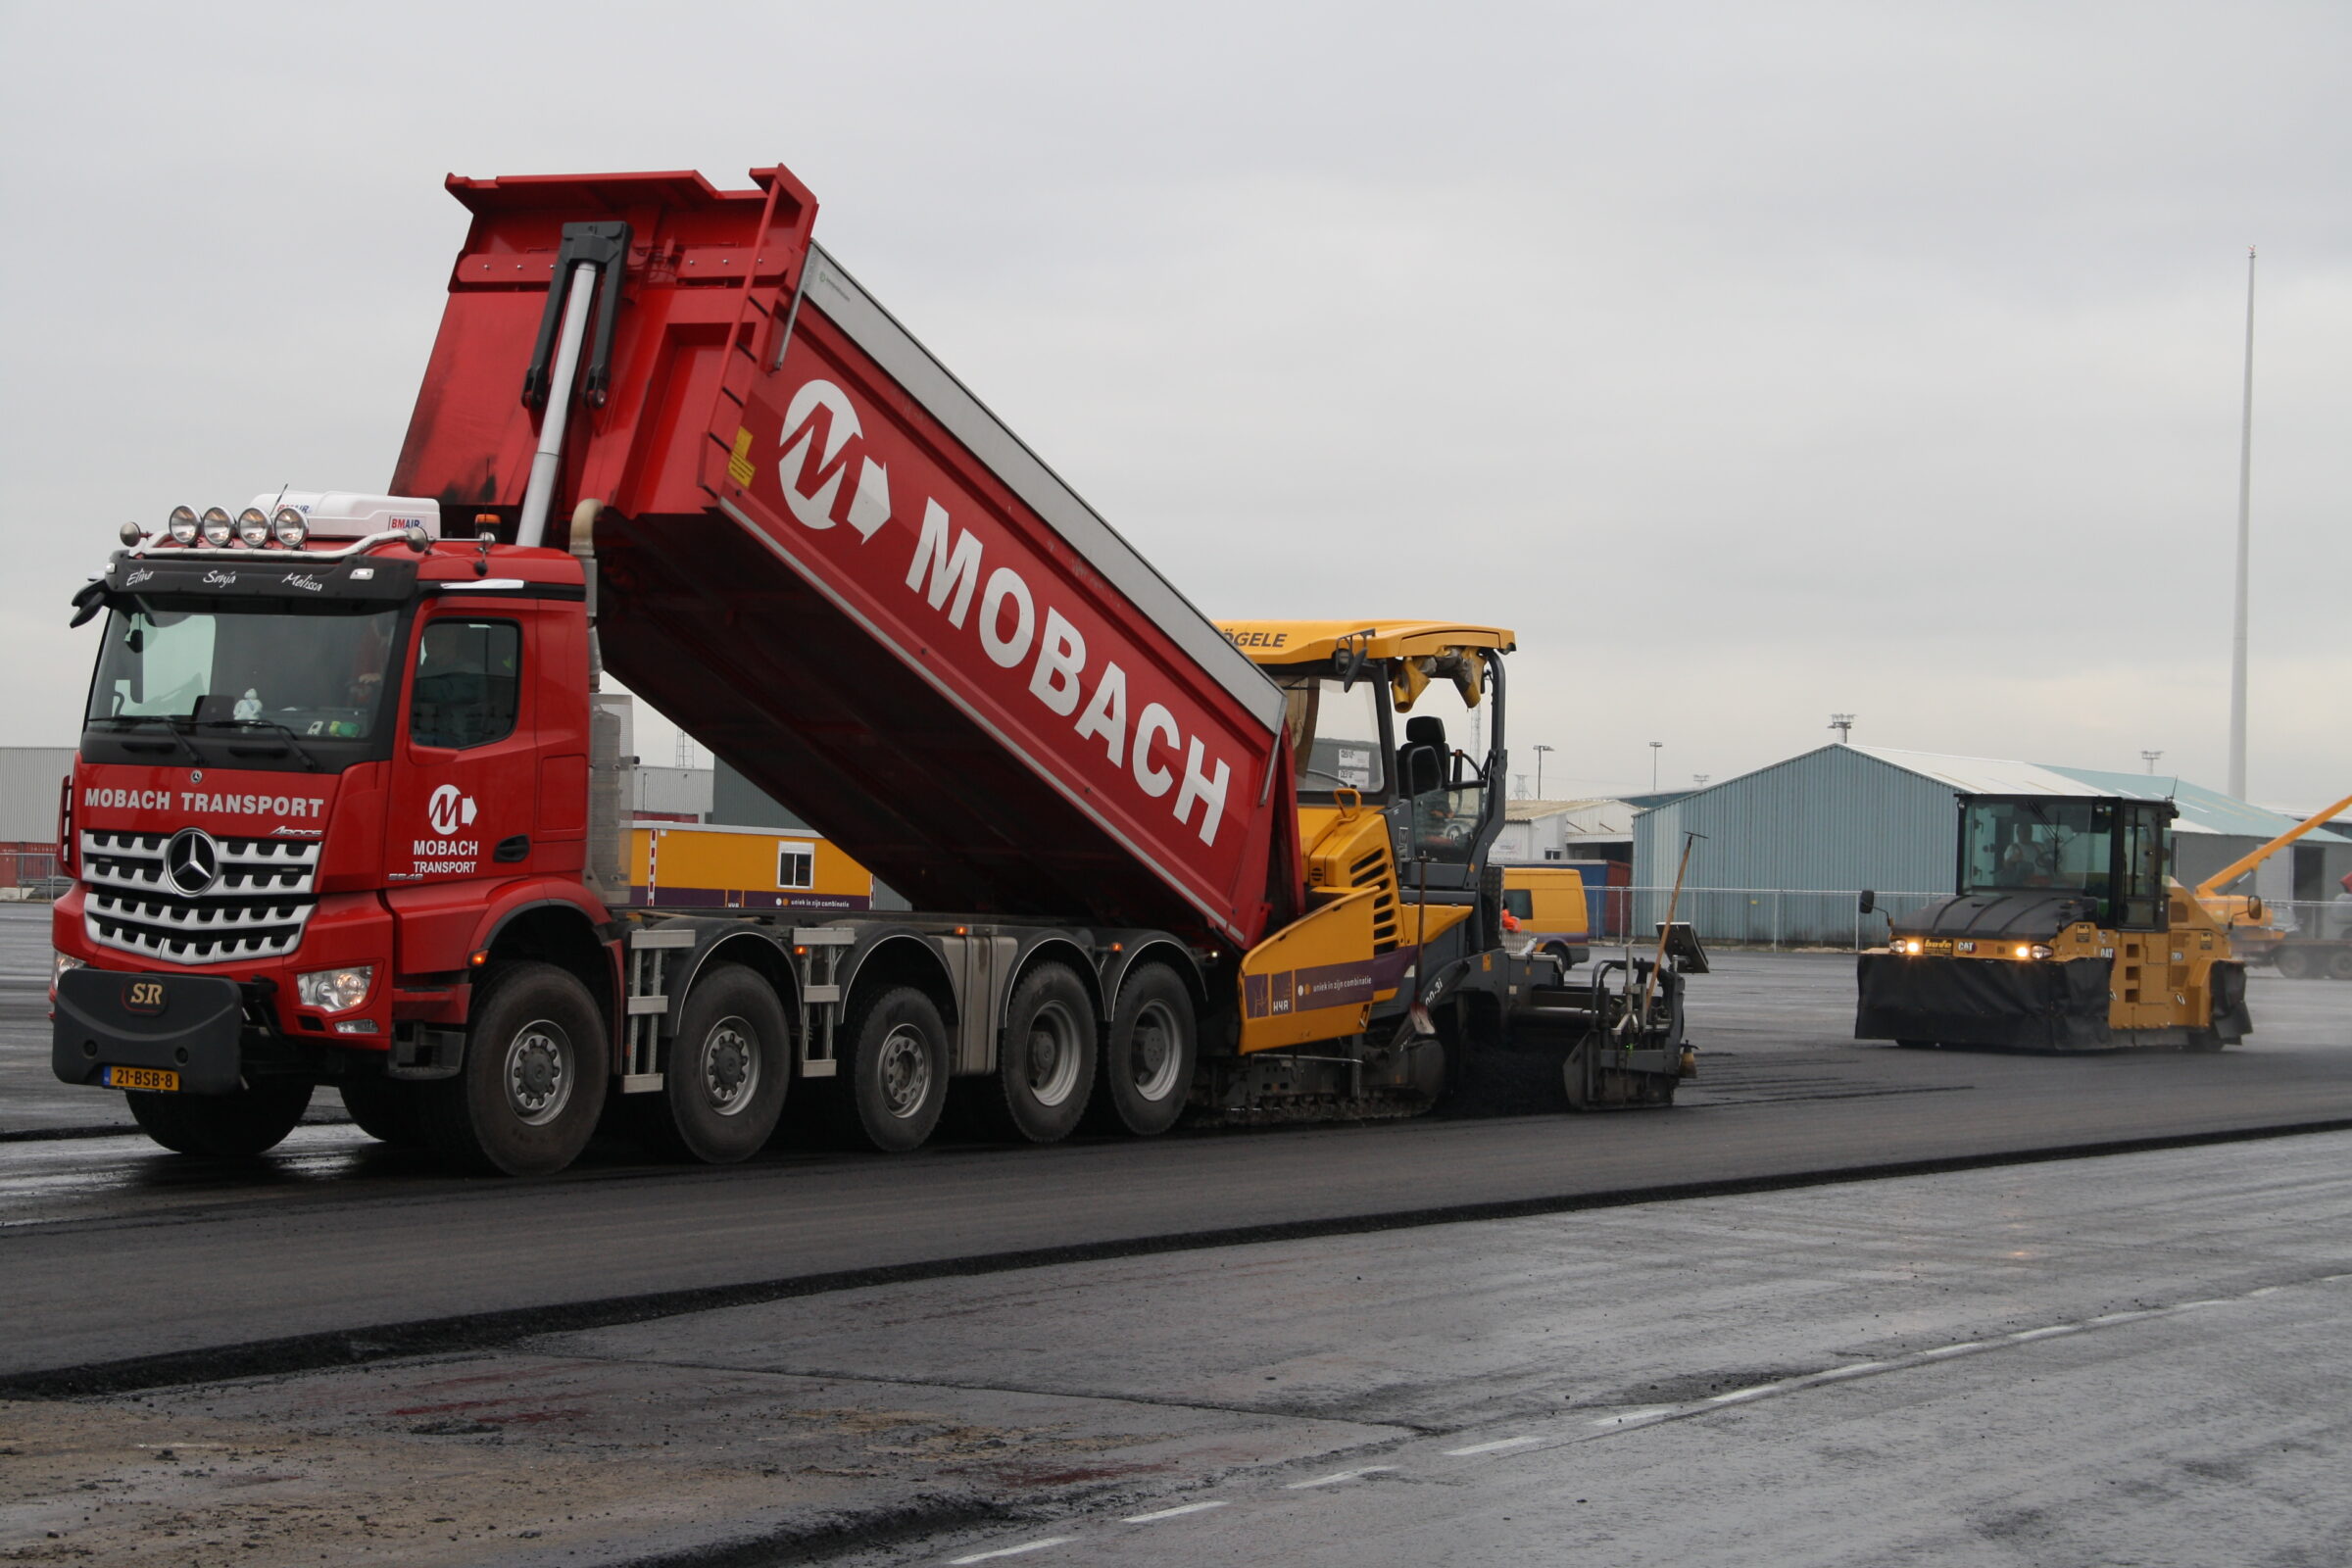 Mobach Transport voert asfalt aan bij werkzaamheden H4A Openbare Ruimte